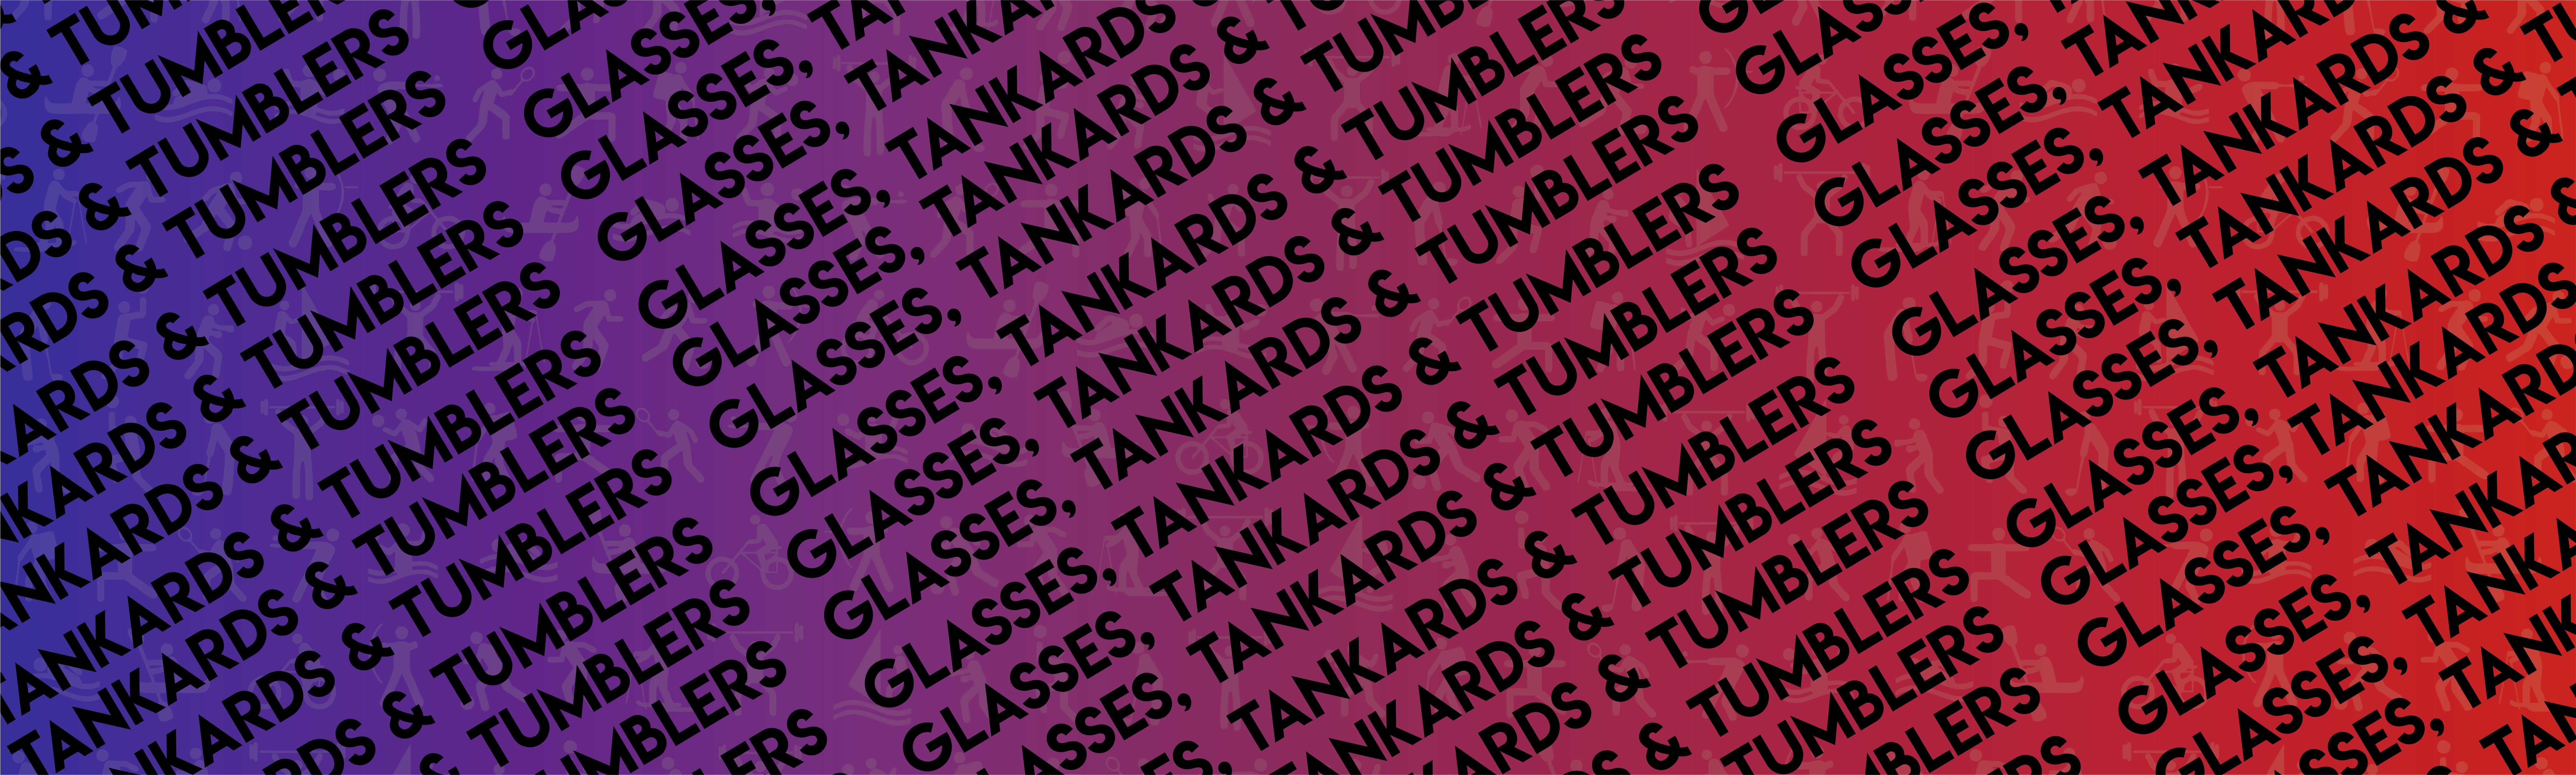 Glasses, Tankards & Tumblers